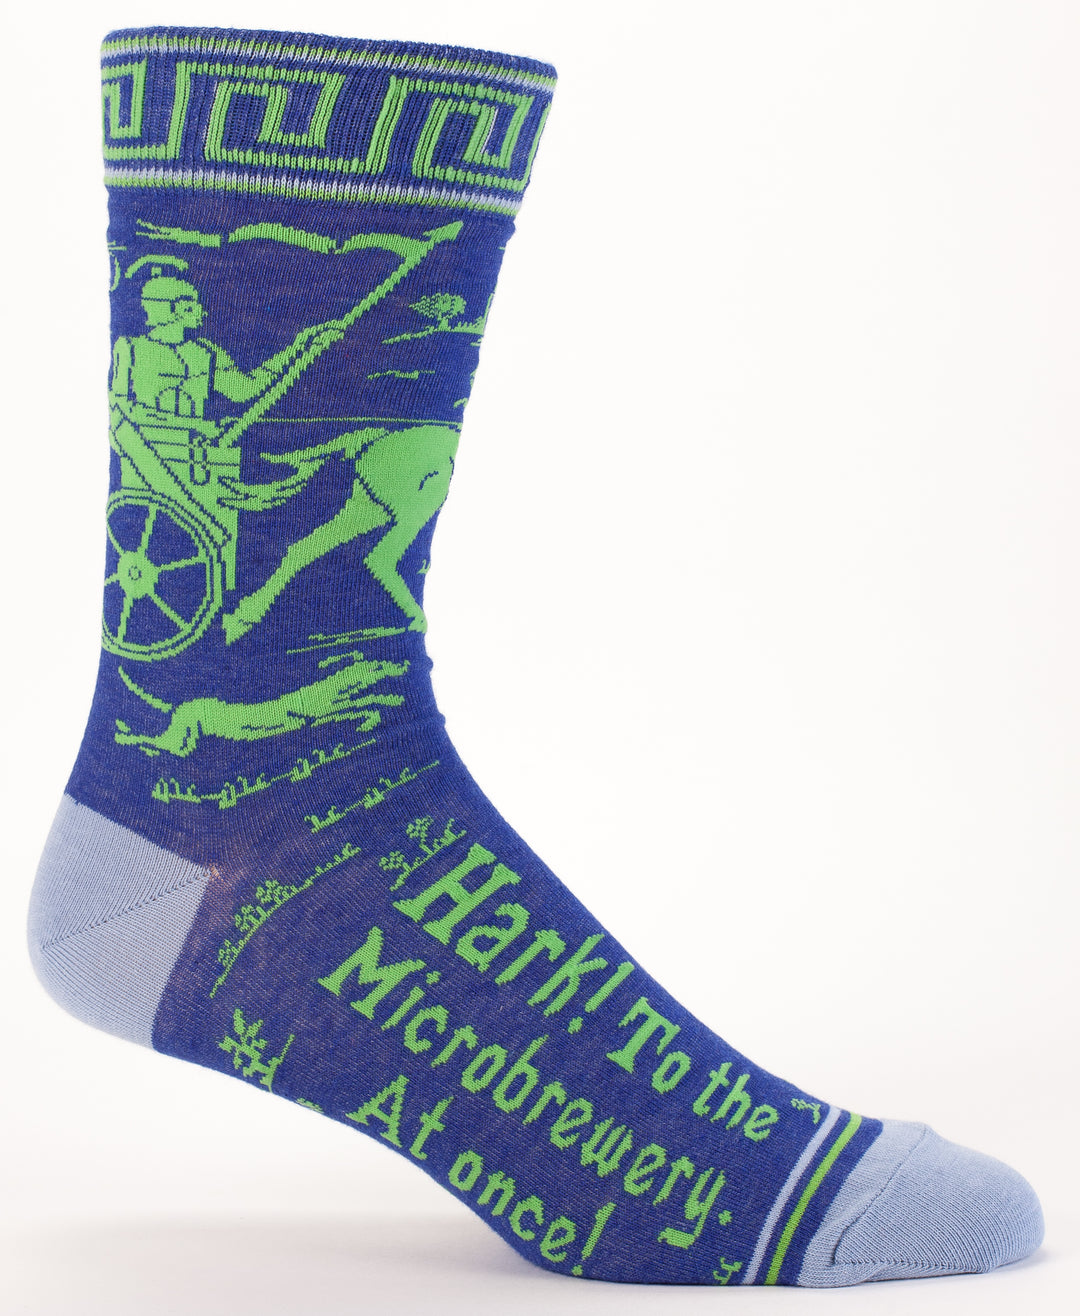 Blue Q Hark Microbrewery Men's Sock